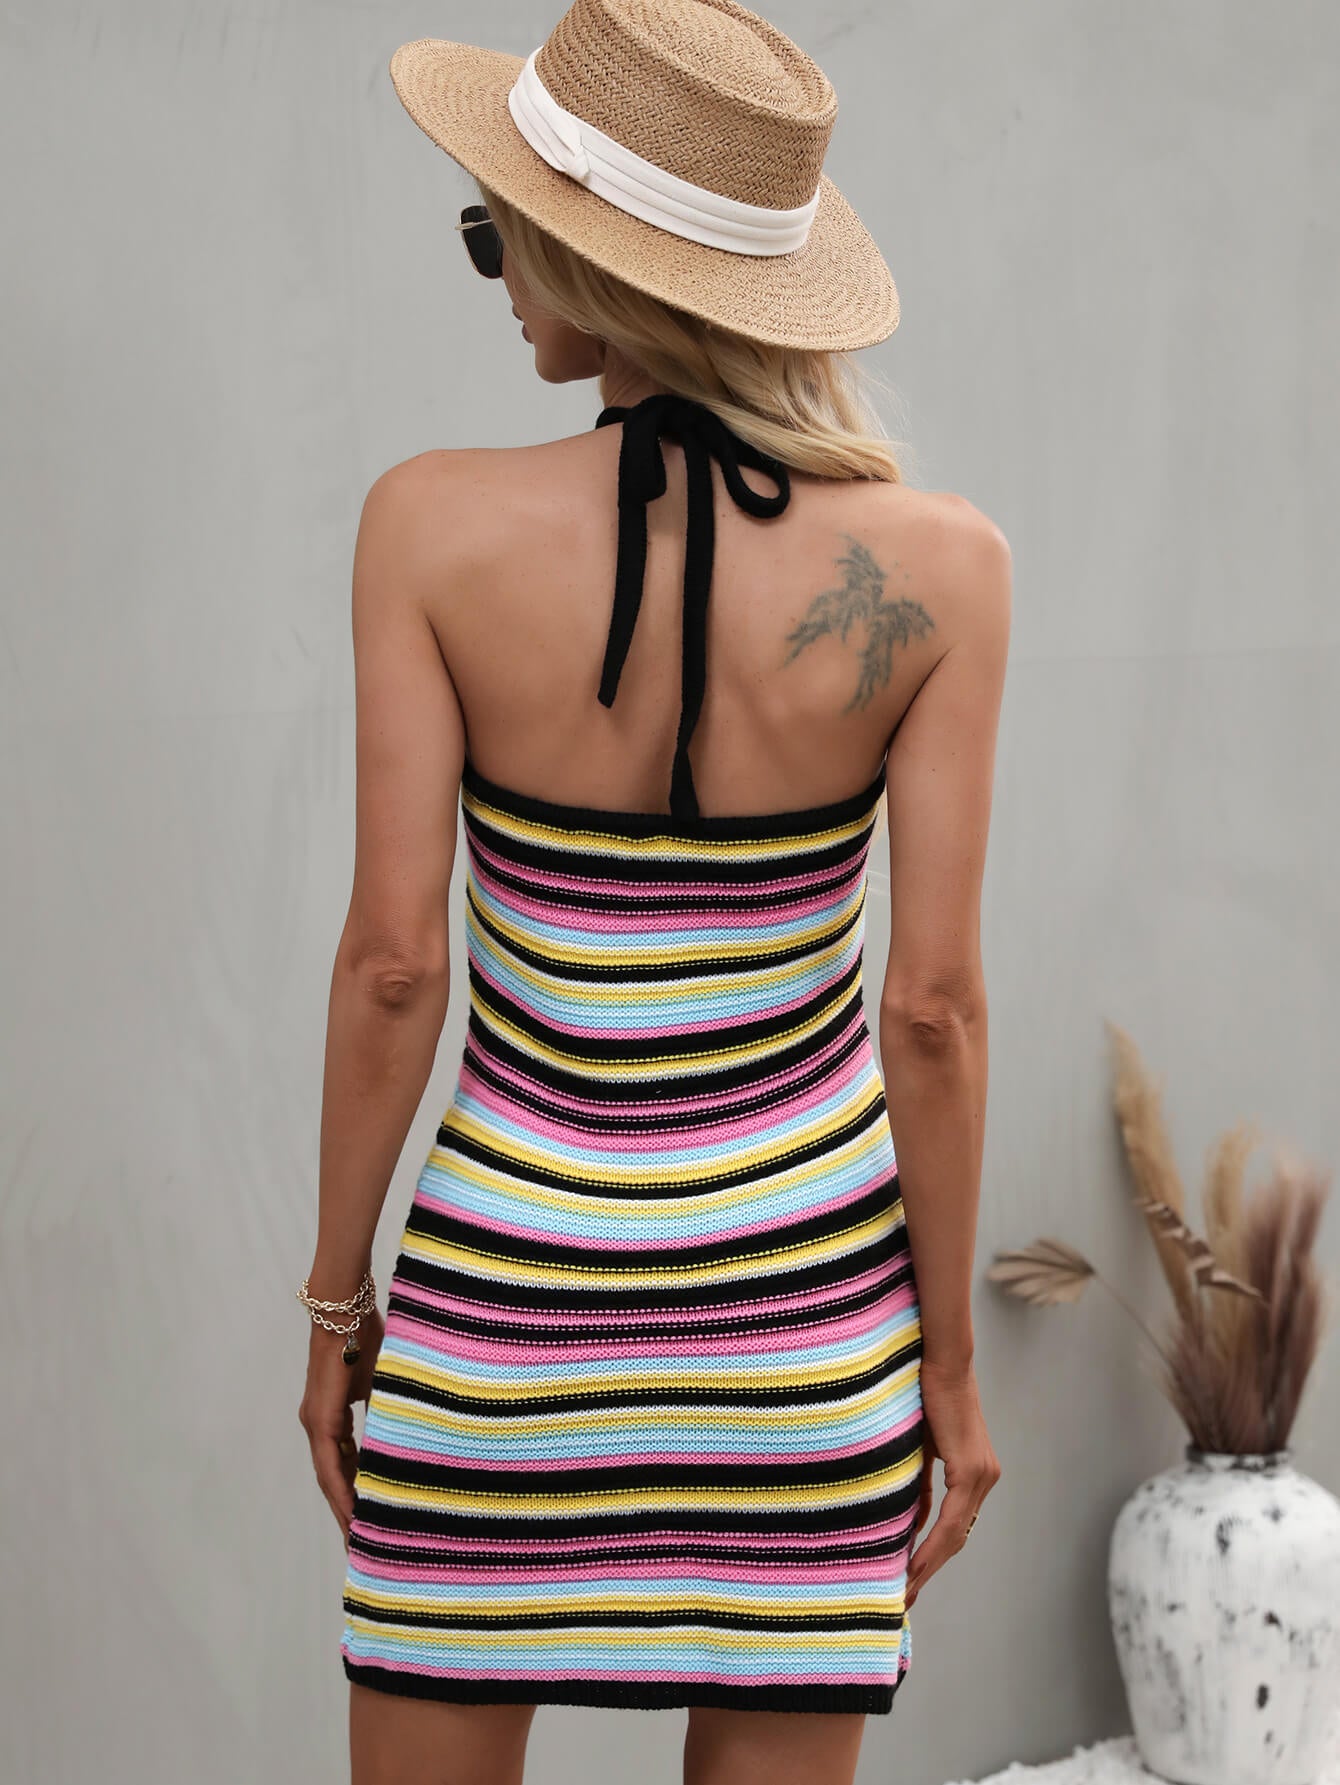 Striped Halter Neck Mini Sweater Dress - Shop women apparel, Jewelry, bath & beauty products online - Arwen's Boutique